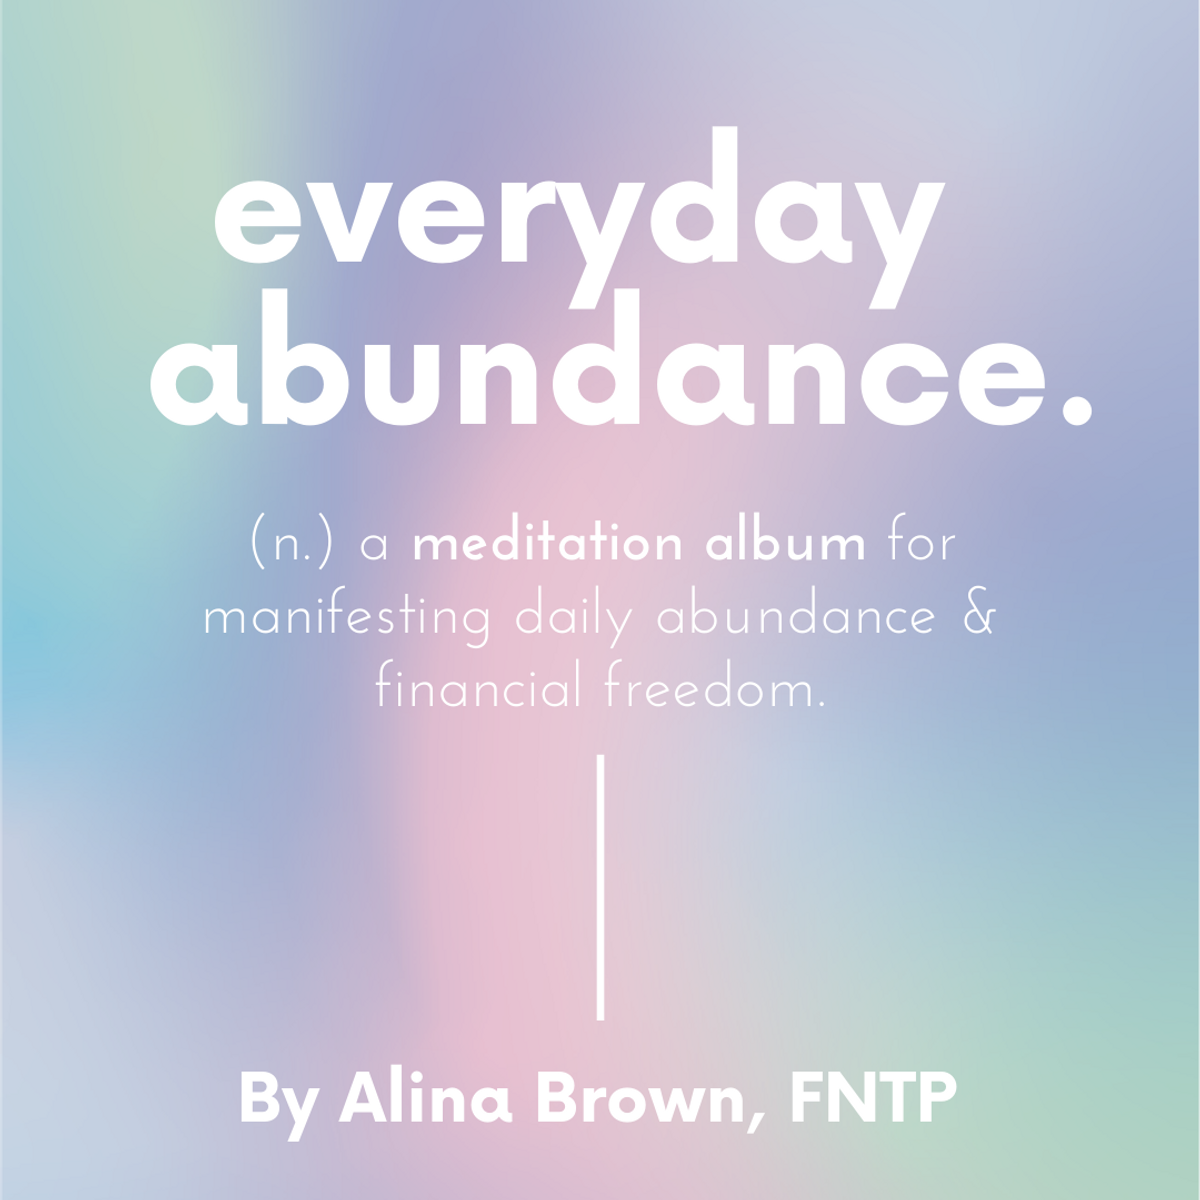 auralign shop everyday abundance guided meditation album